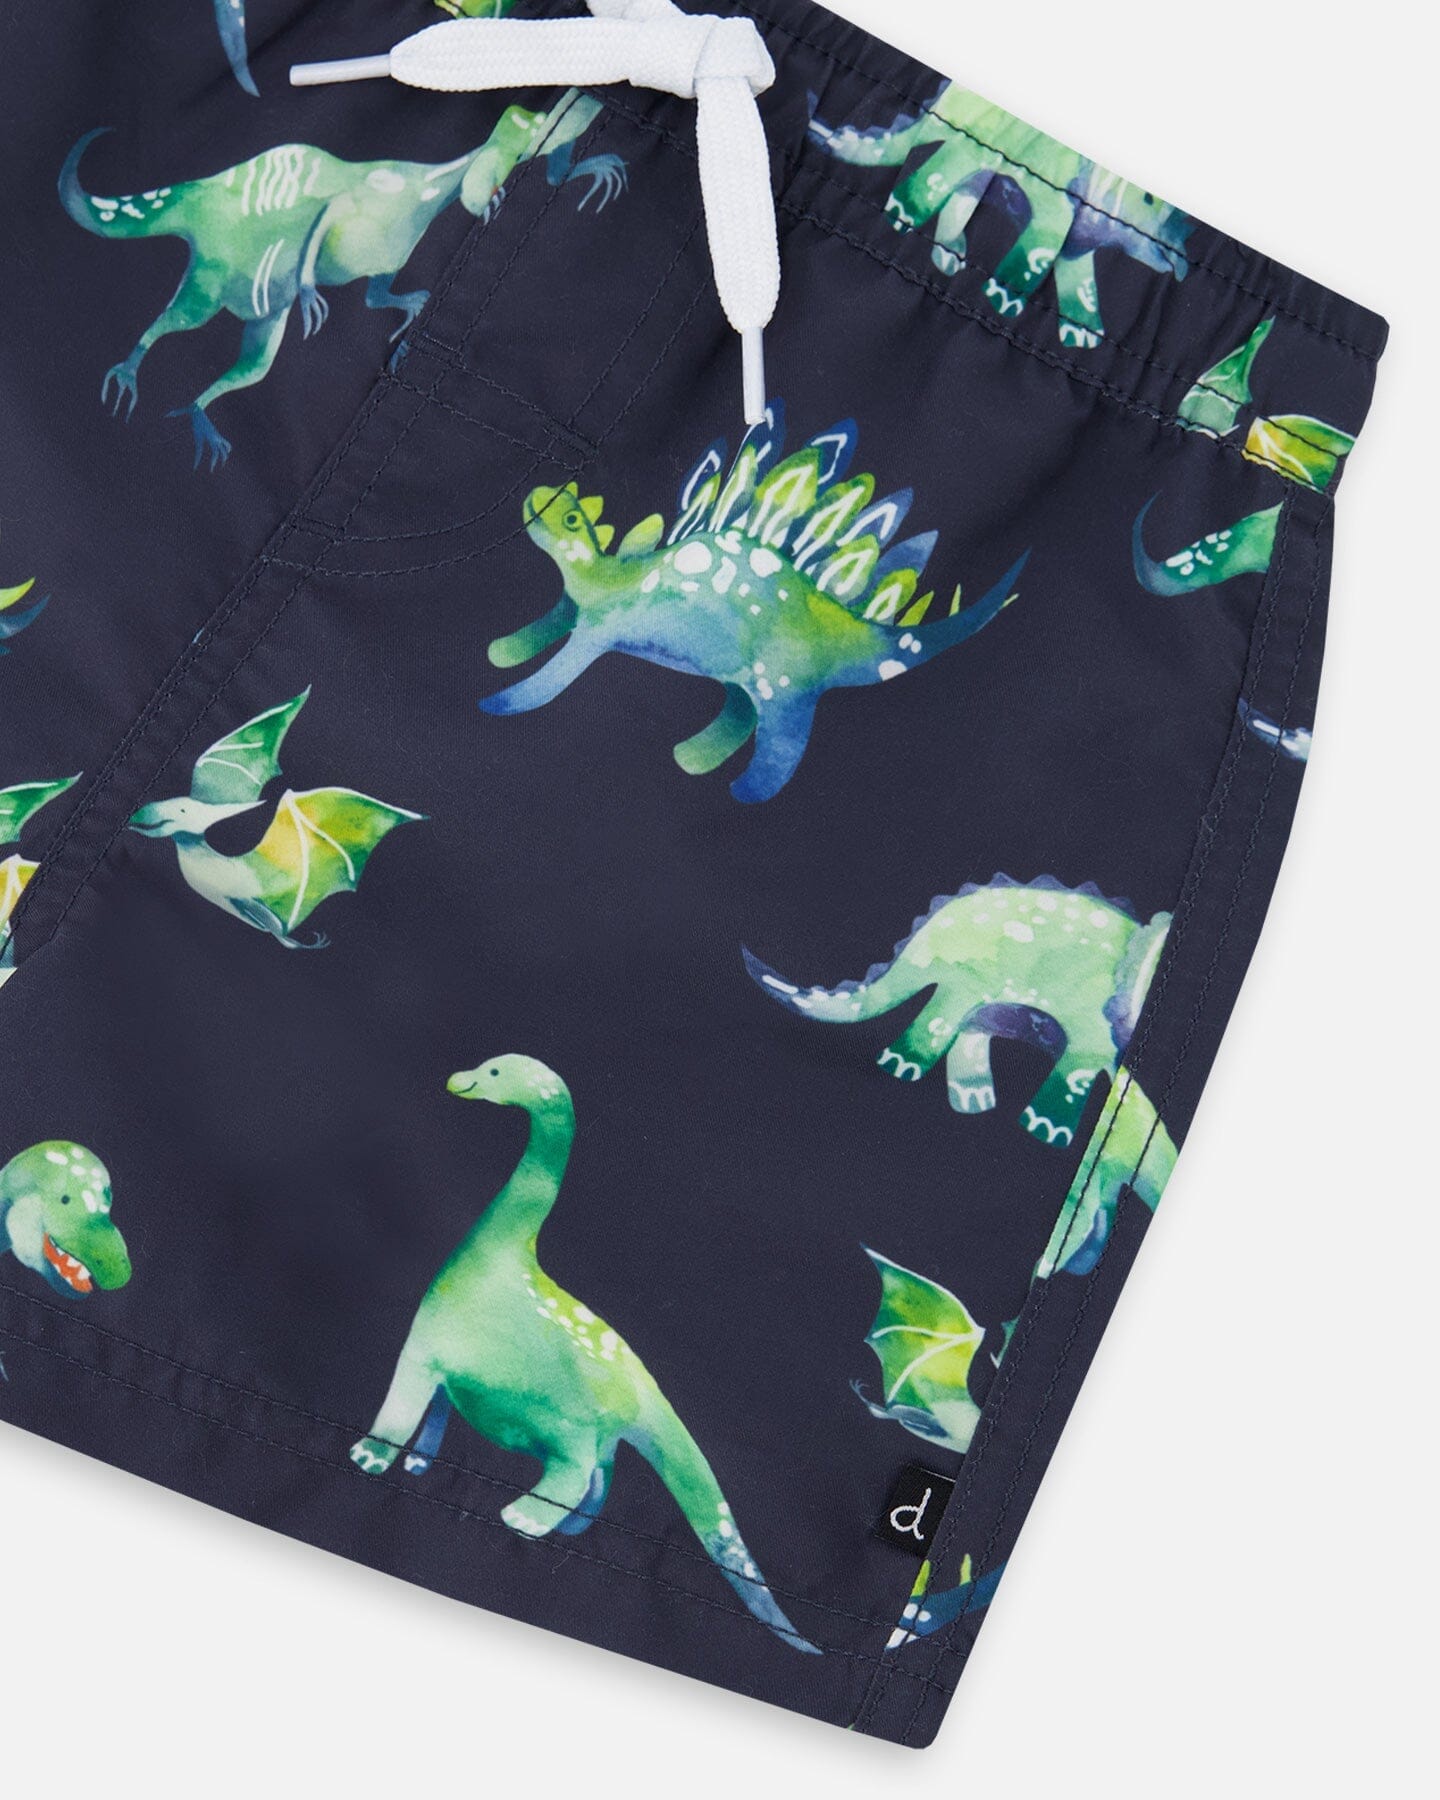 Mid-Thigh Boardshort Grey Printed Dinosaurs - F30NB11_051